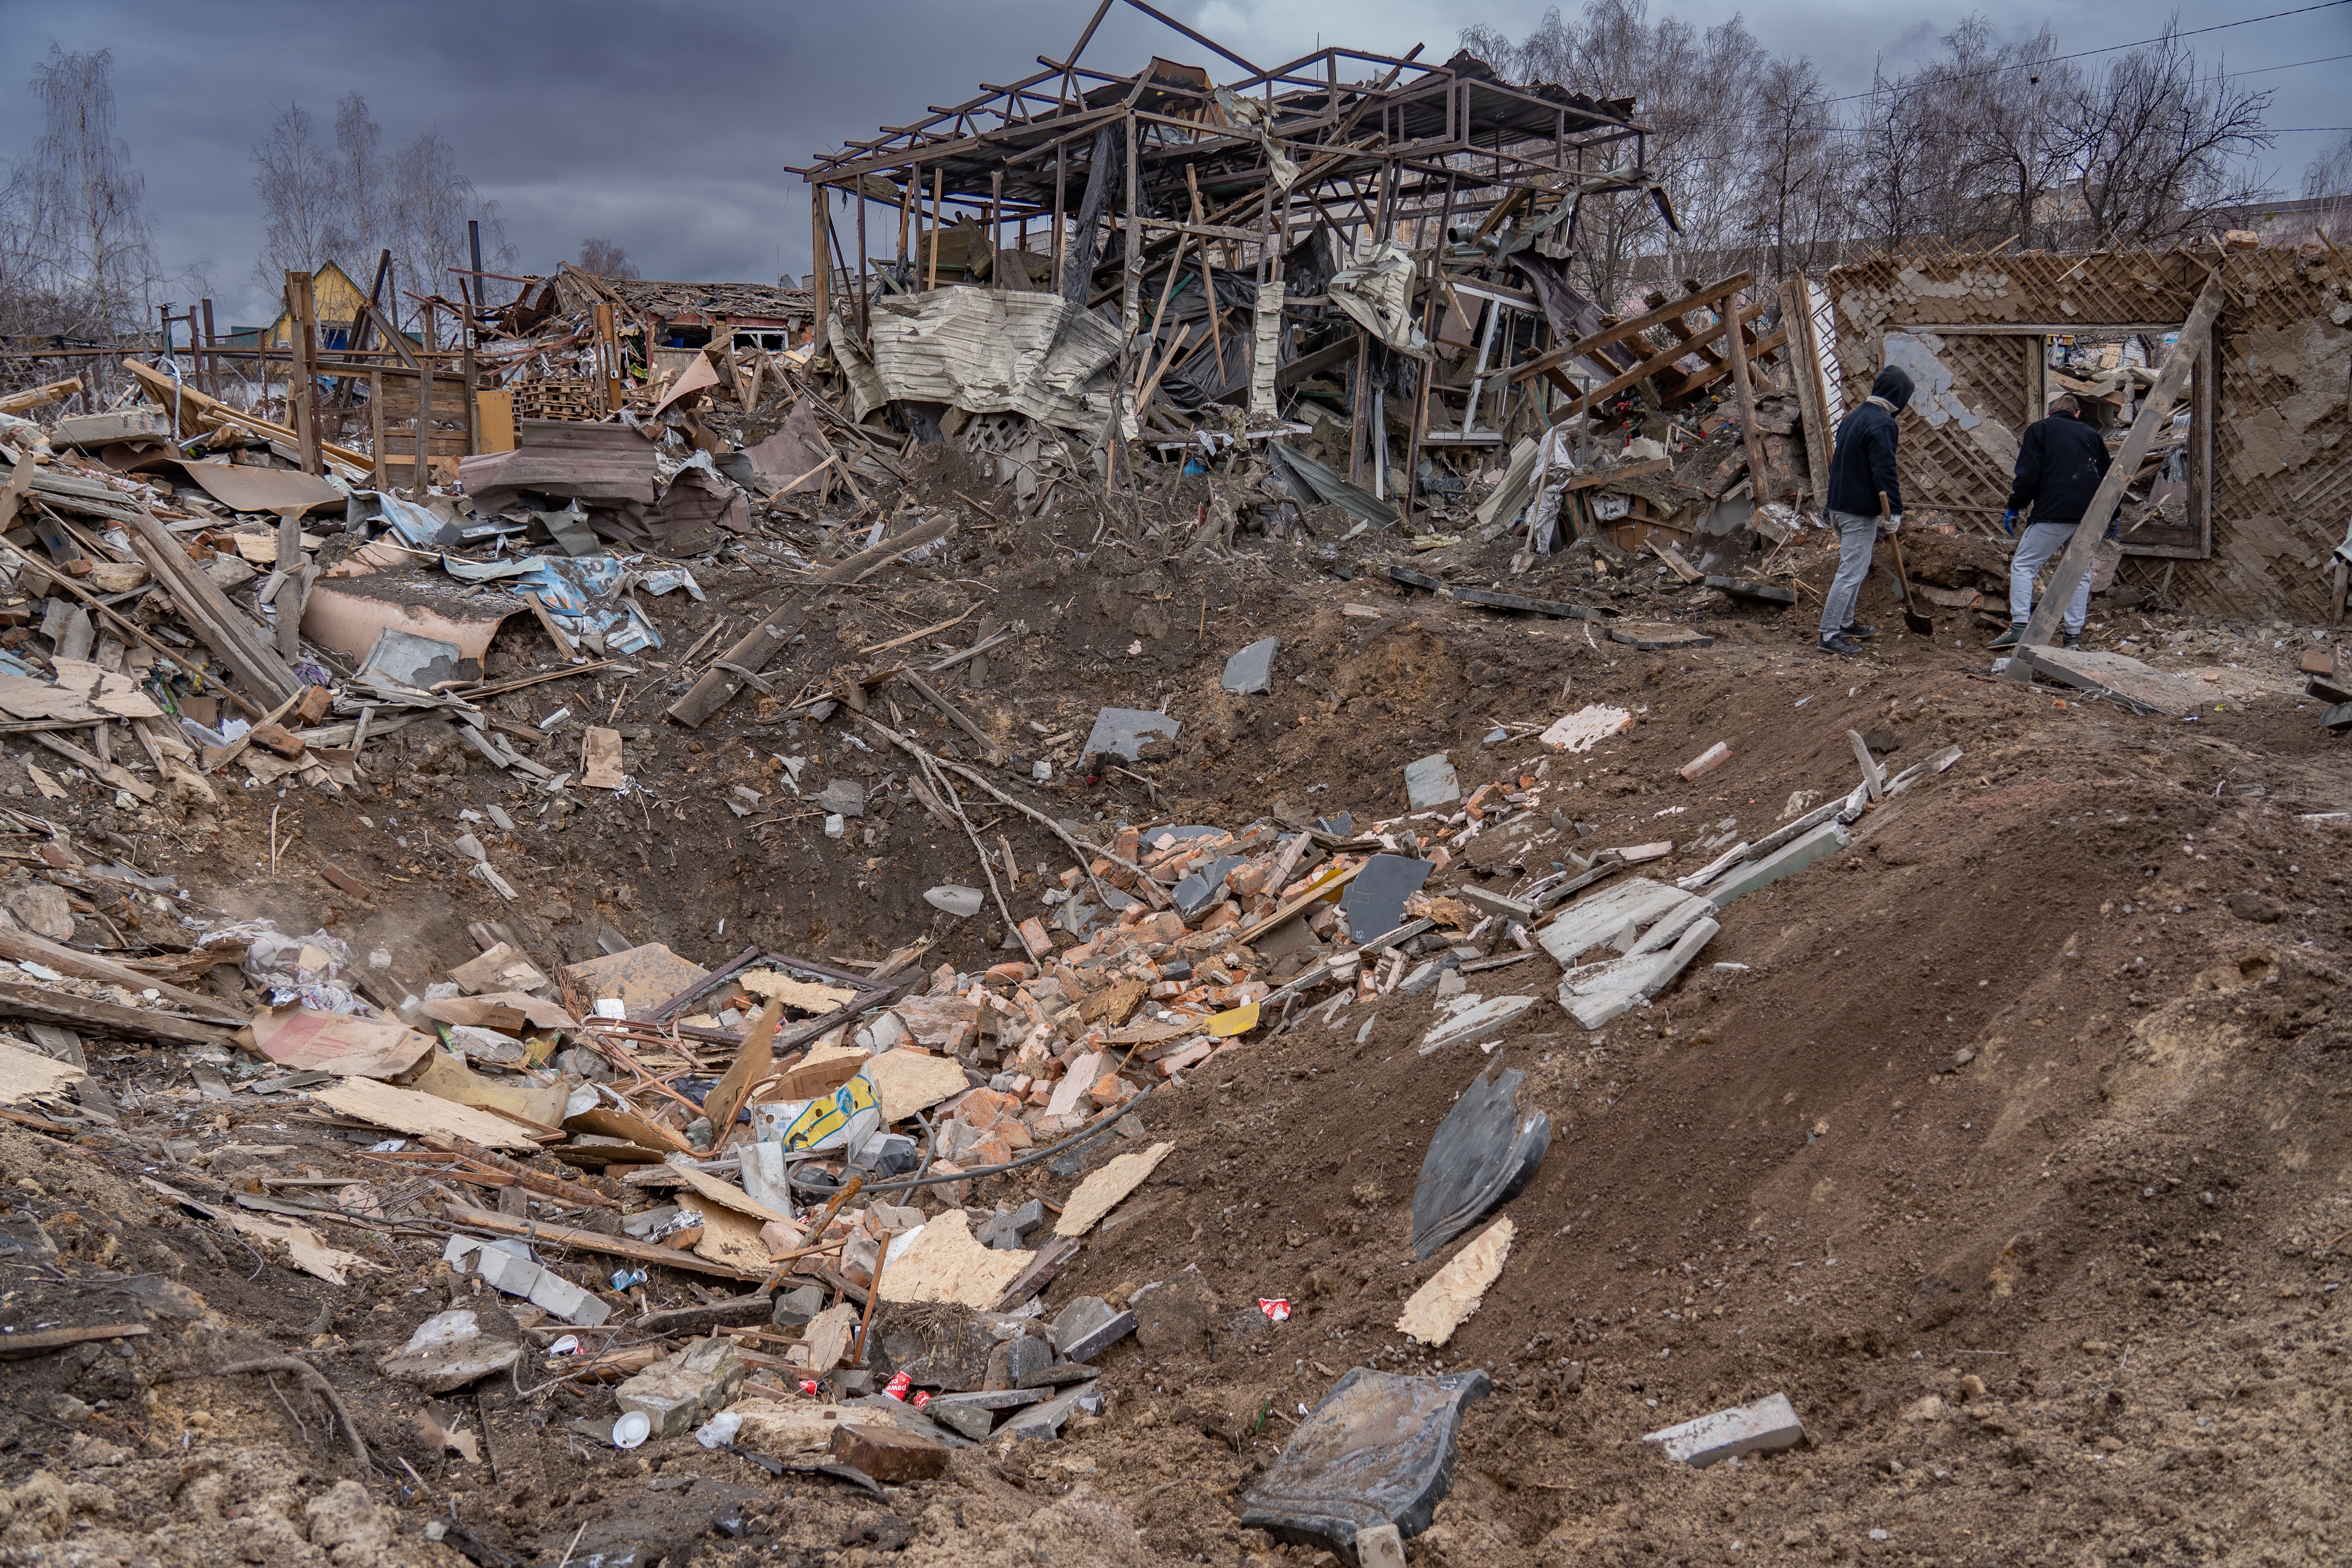 Los residentes dicen que 10 casas fueron destruidas en una serie de ataques que afectaron a esta zona de Zhytomyr